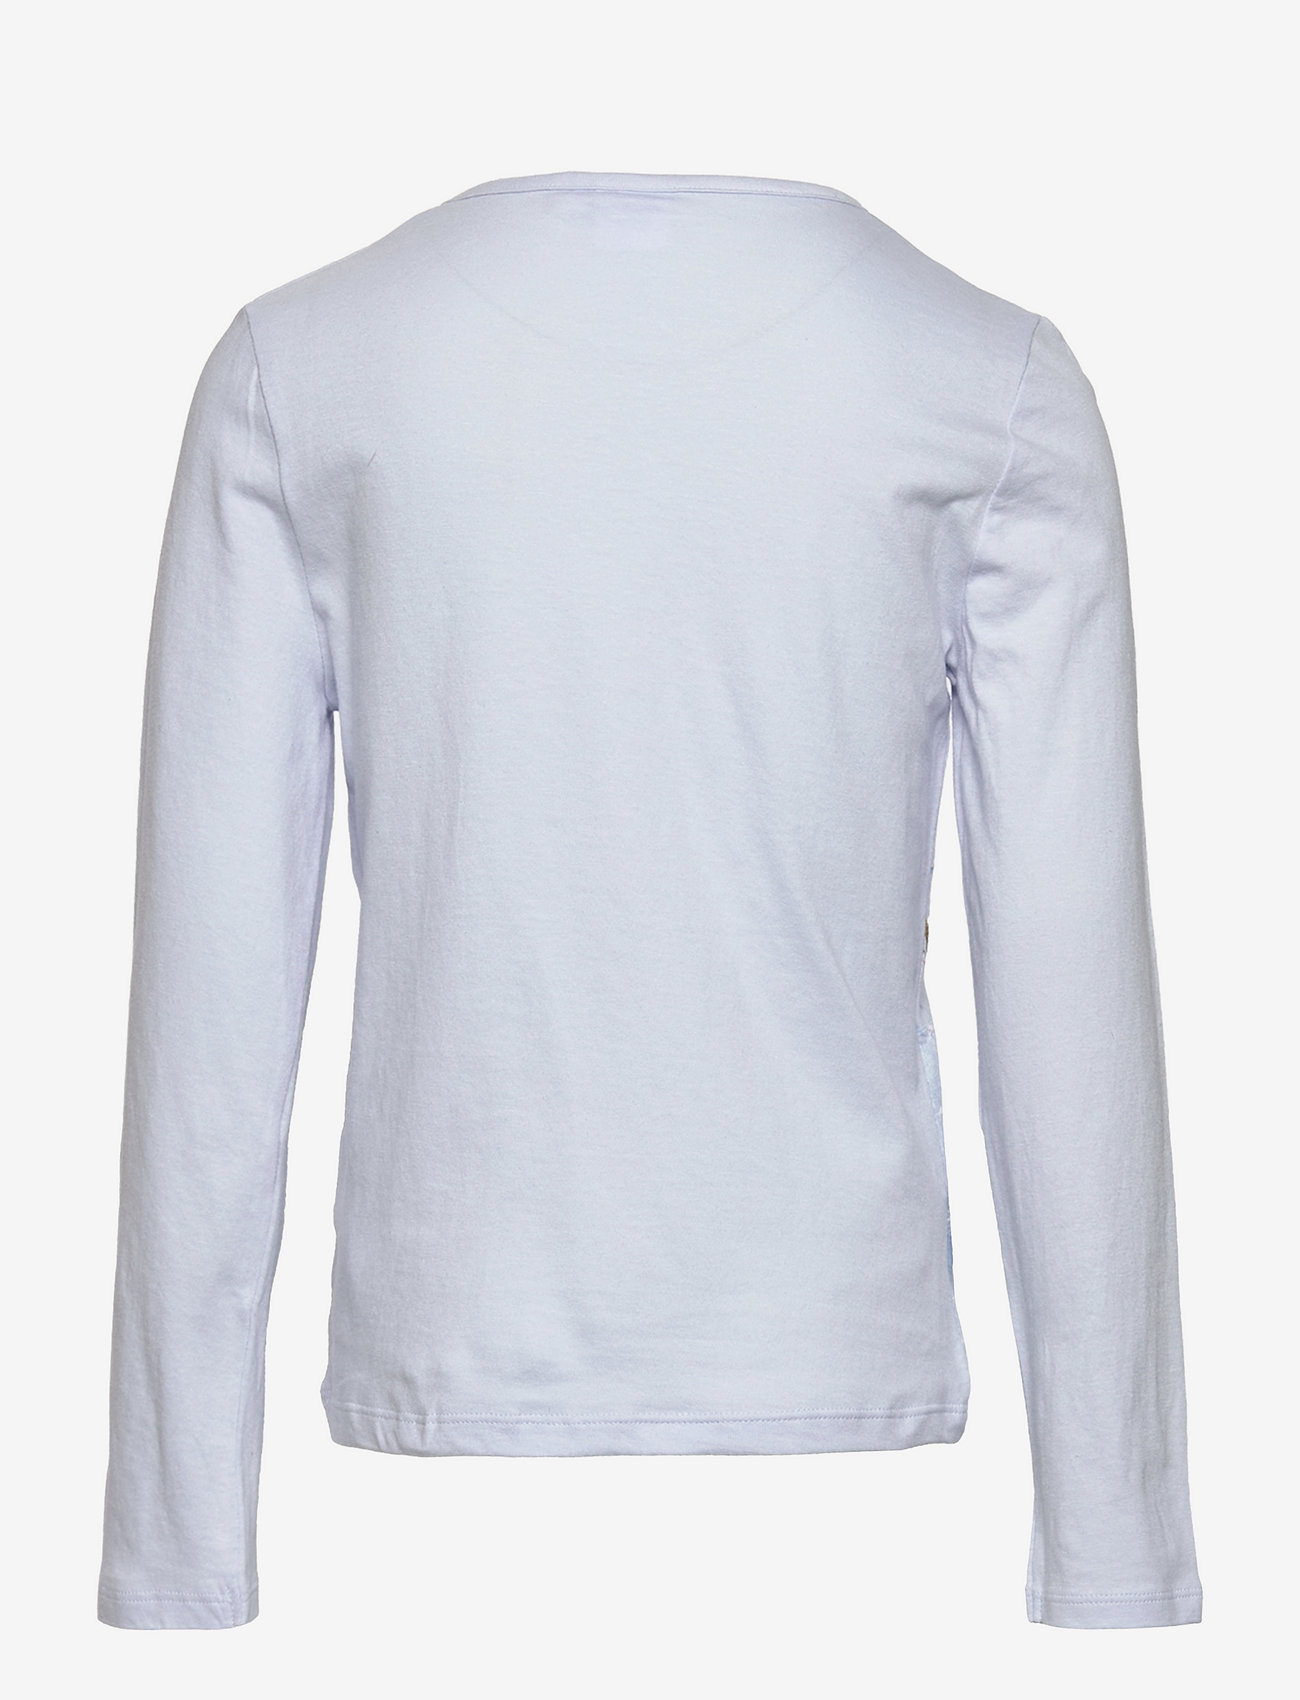 Ledus sirds - LONG-SLEEVED T-SHIRT - apdrukāts t-krekls ar garām piedurknēm - blue - 1